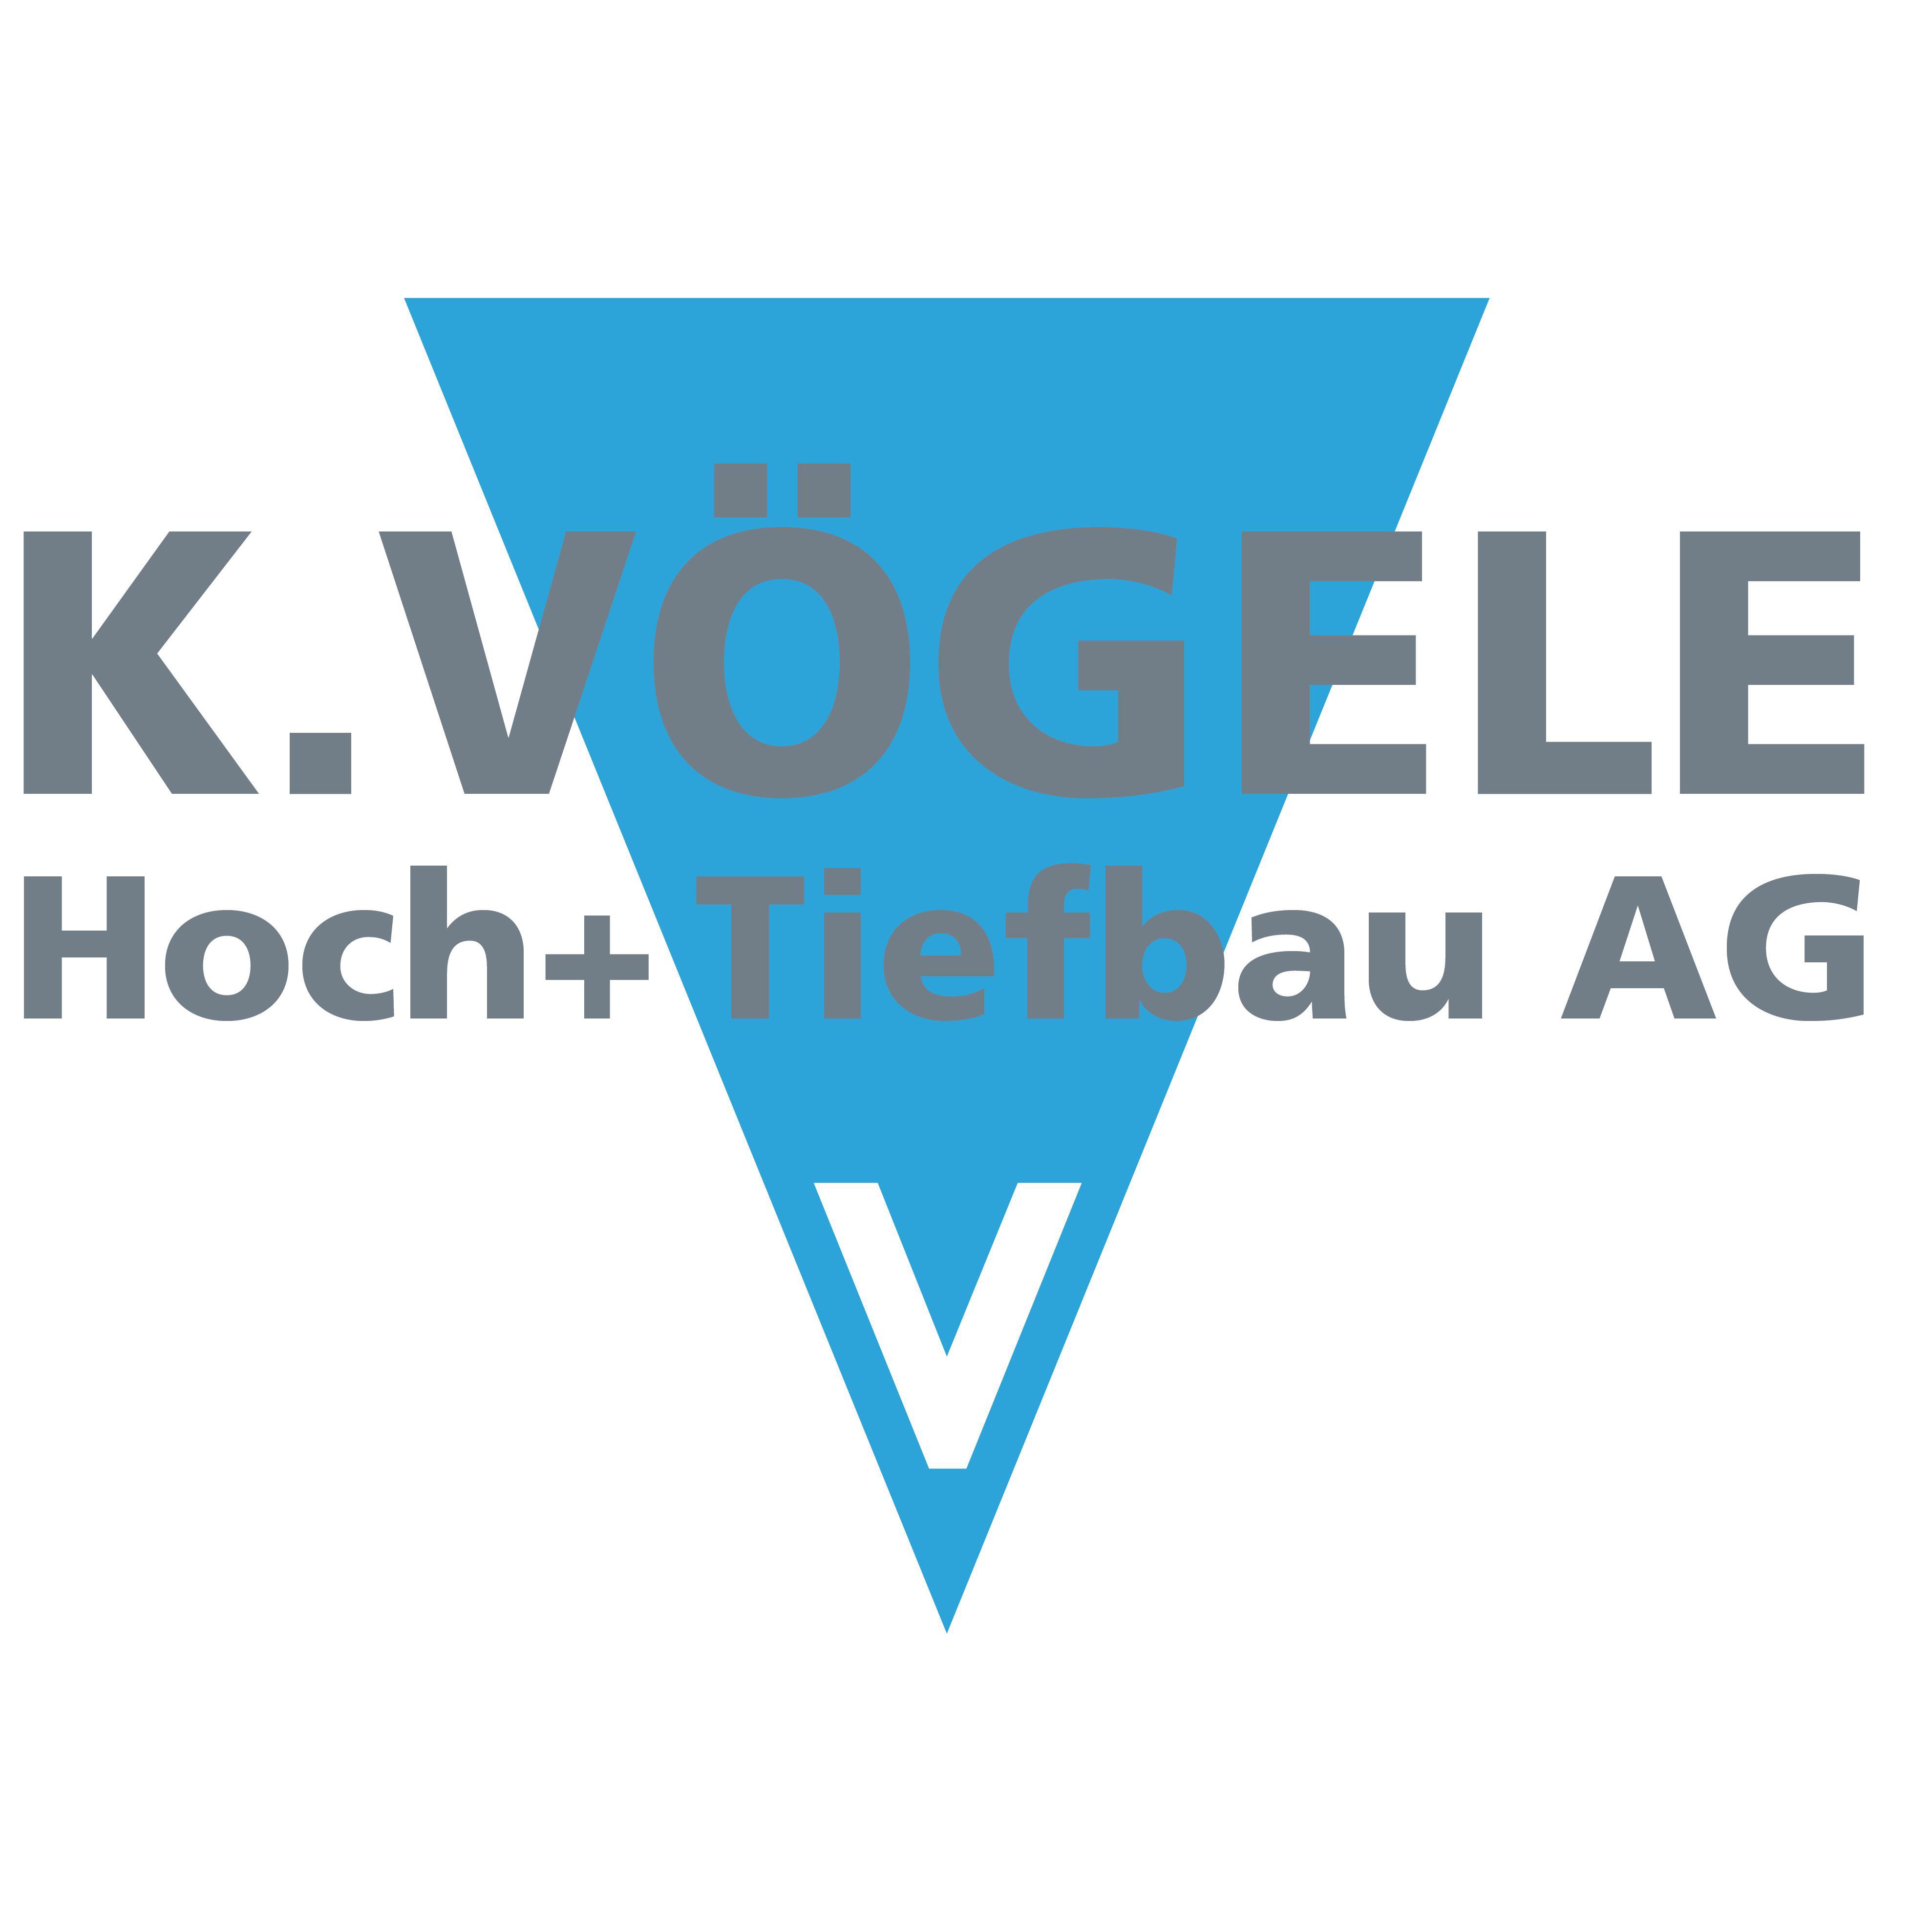 Karl Vögele Hoch- und Tiefbau AG Logo